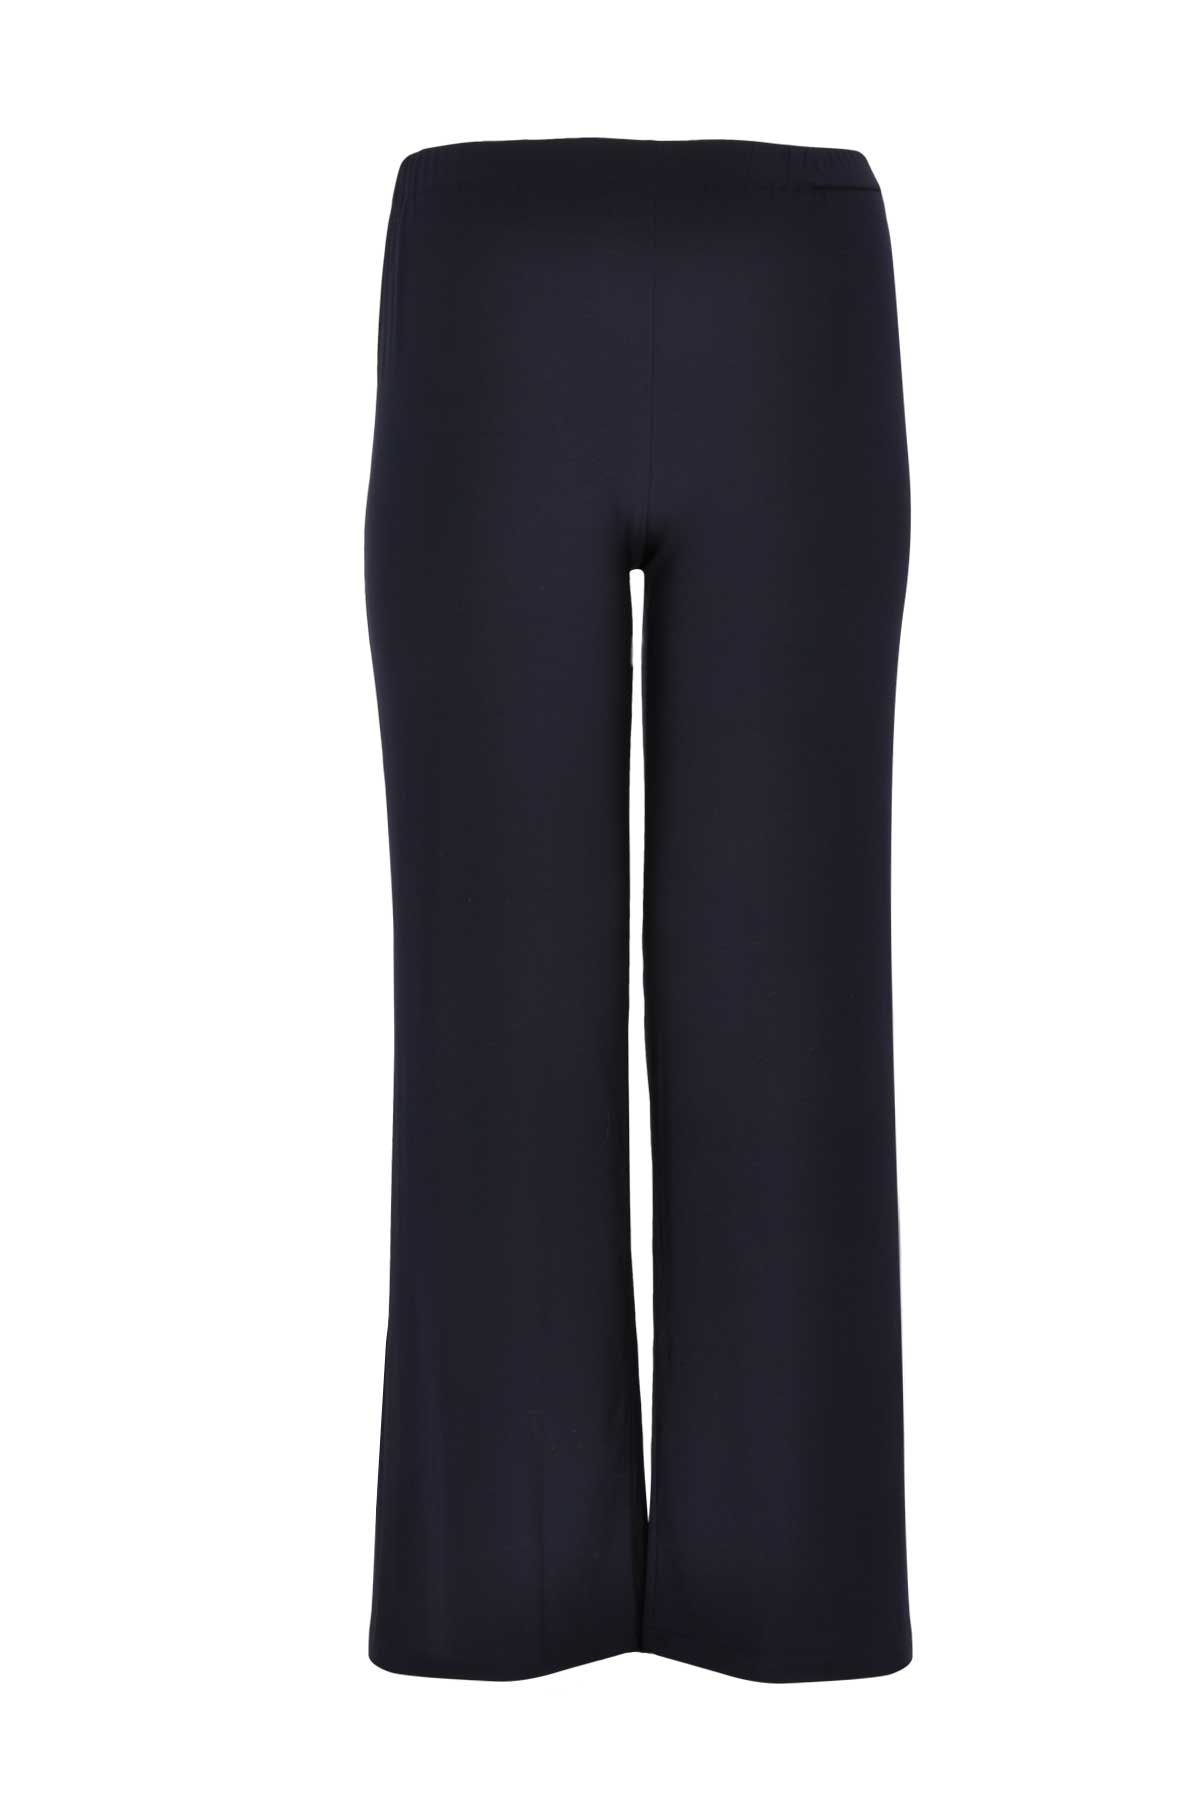 Trousers long DOLCE - black blue